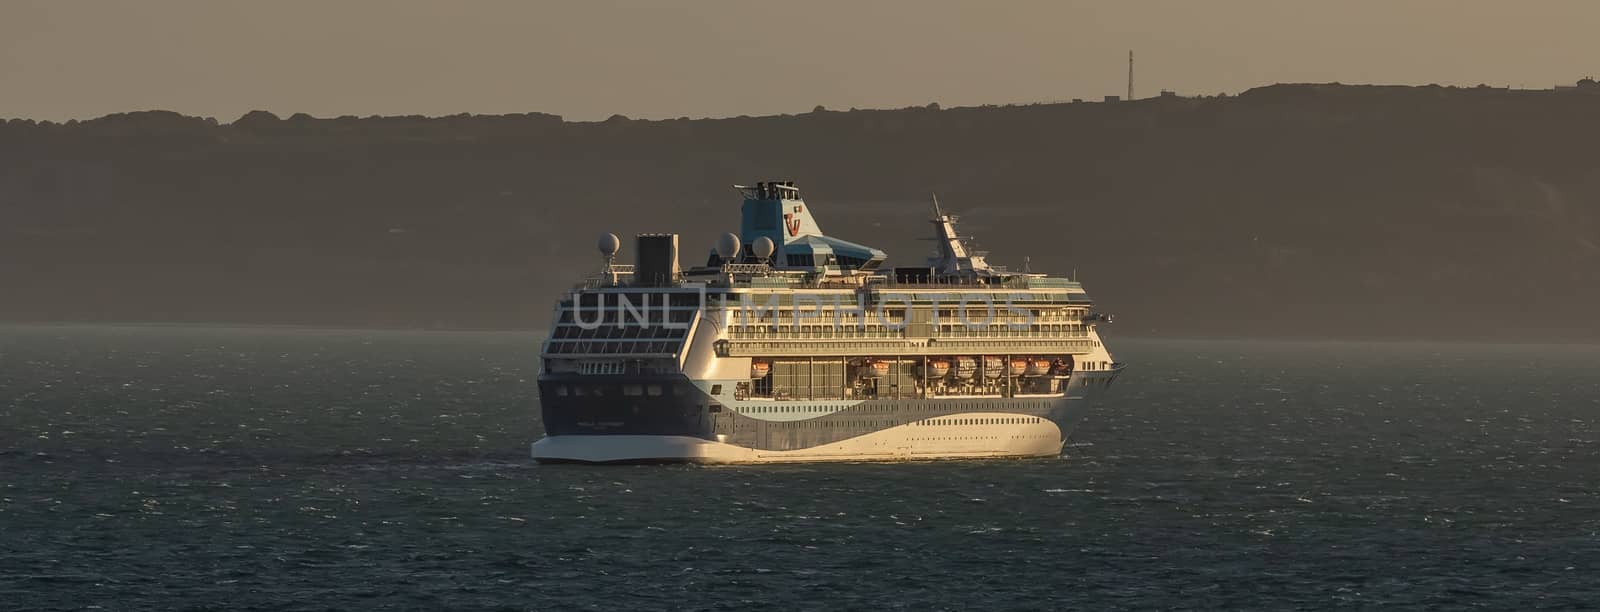 Weymouth Bay, United Kingdom - July 5, 2020: Beautiful shot of cruise ship Marella Discovery anchored in Weymouth Bay at sunset.